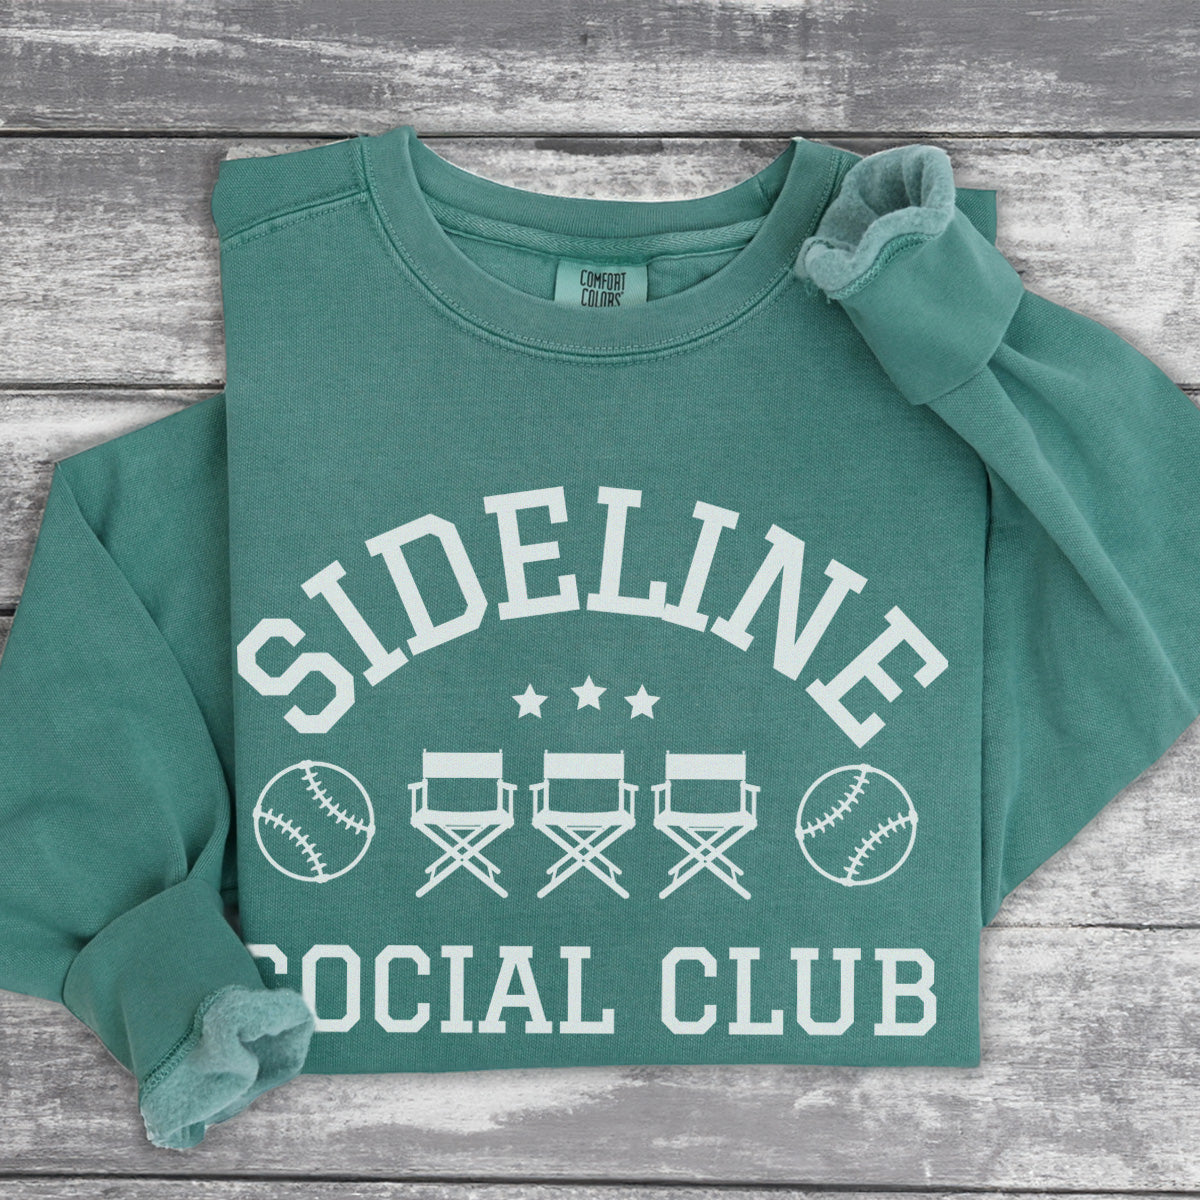 Sideline Social Club - Baseball | Comfort Colors Sweatshirt for Softball or Baseball Parent